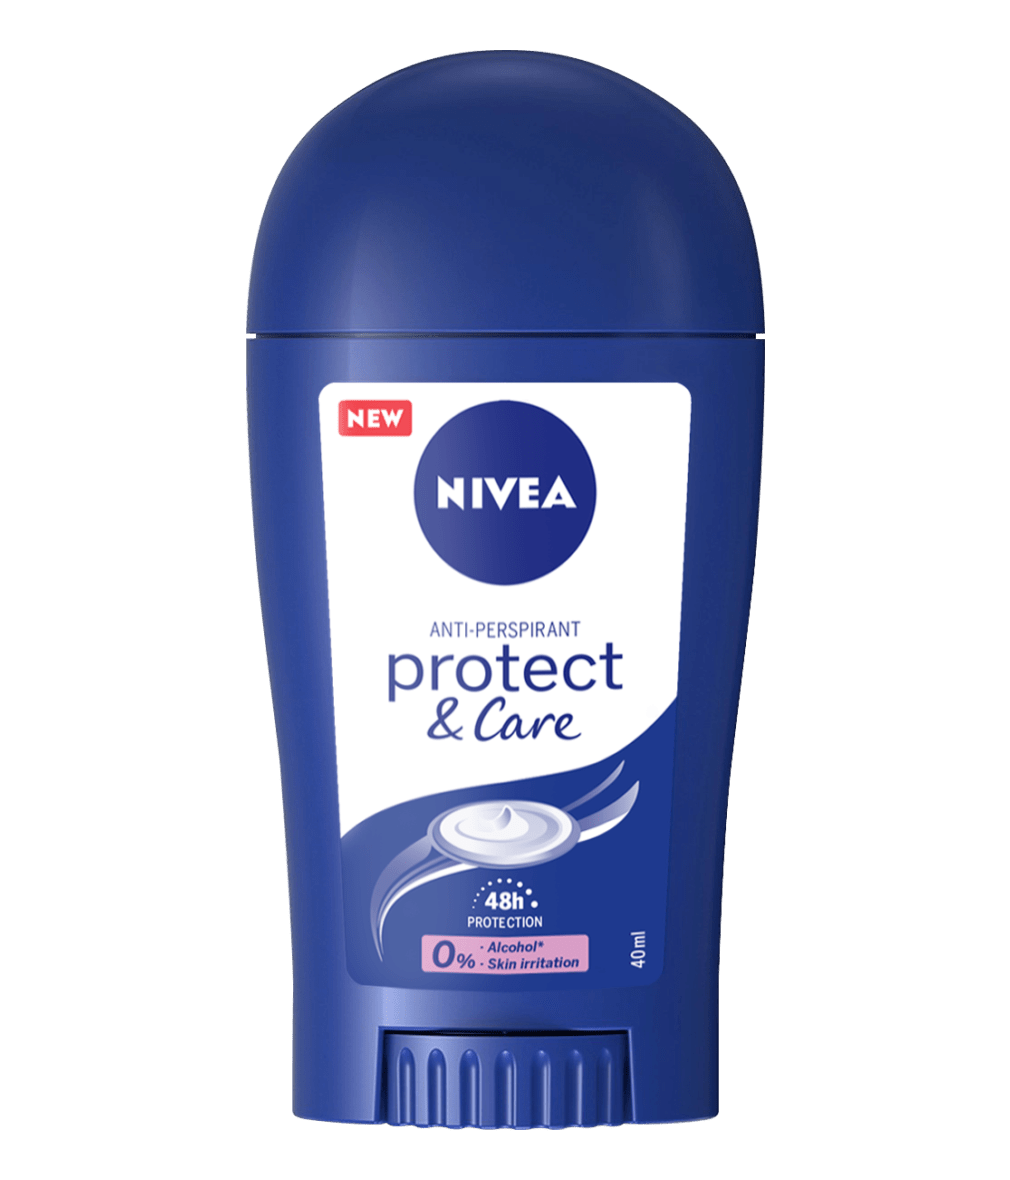 Valkuilen plannen Twinkelen NIVEA | Protect & Care | Anti-Perspirant